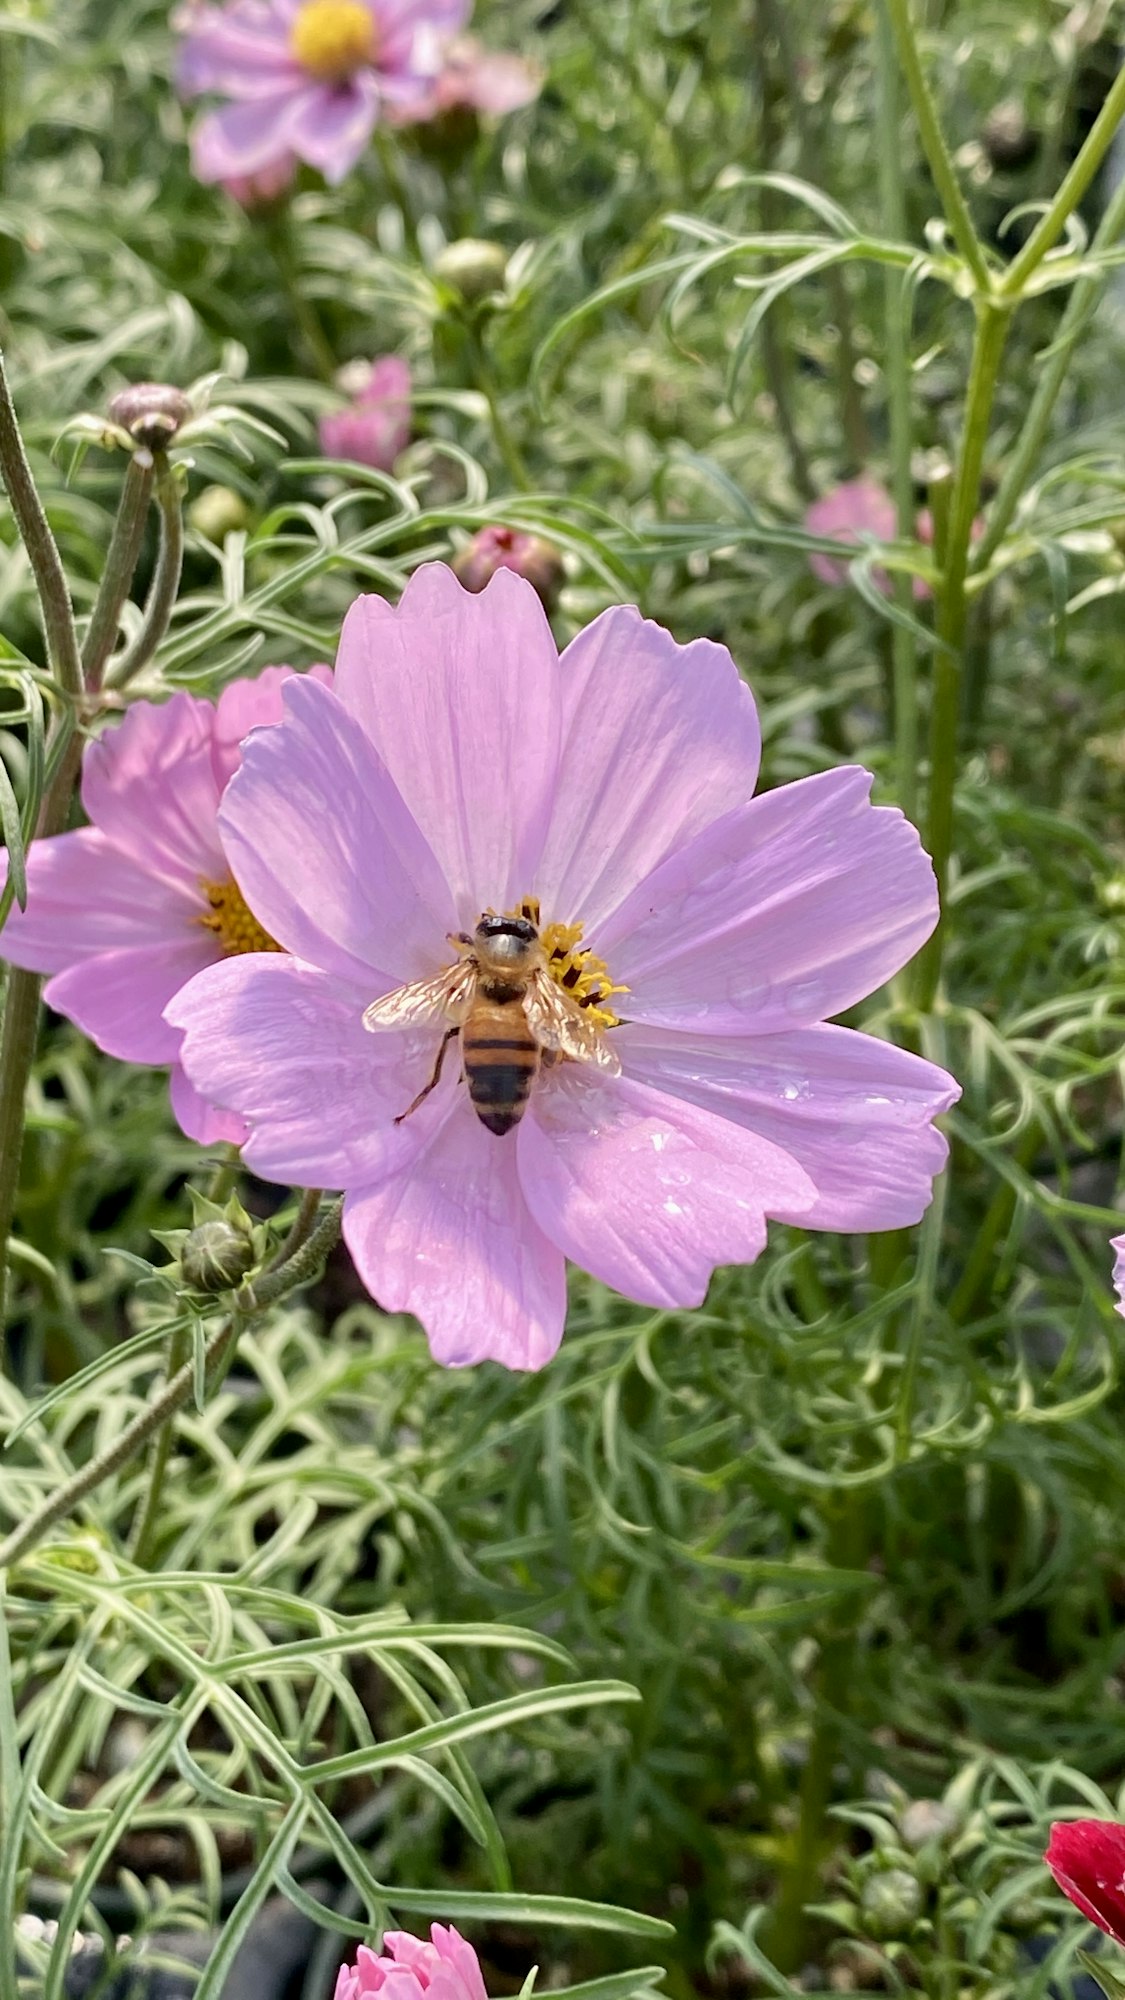 Honey bee on purple cosmos flower